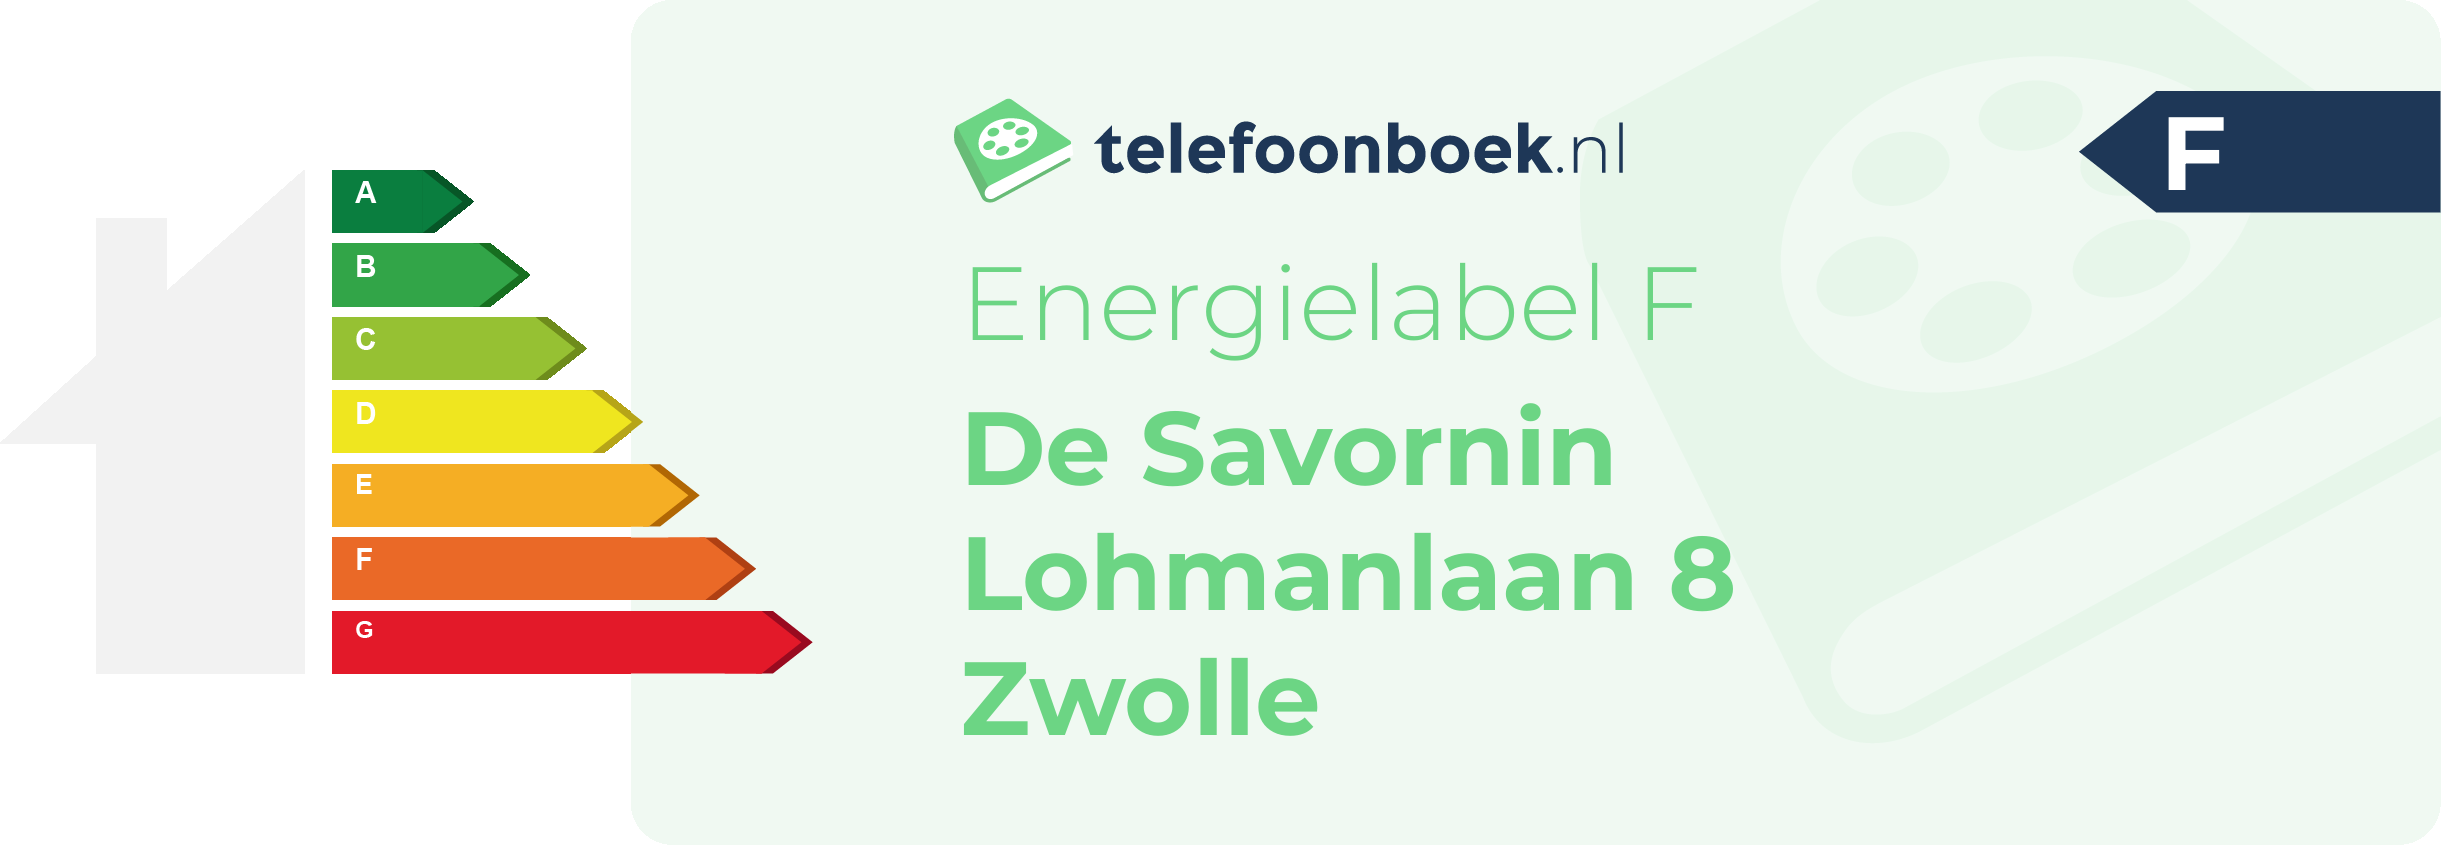 Energielabel De Savornin Lohmanlaan 8 Zwolle